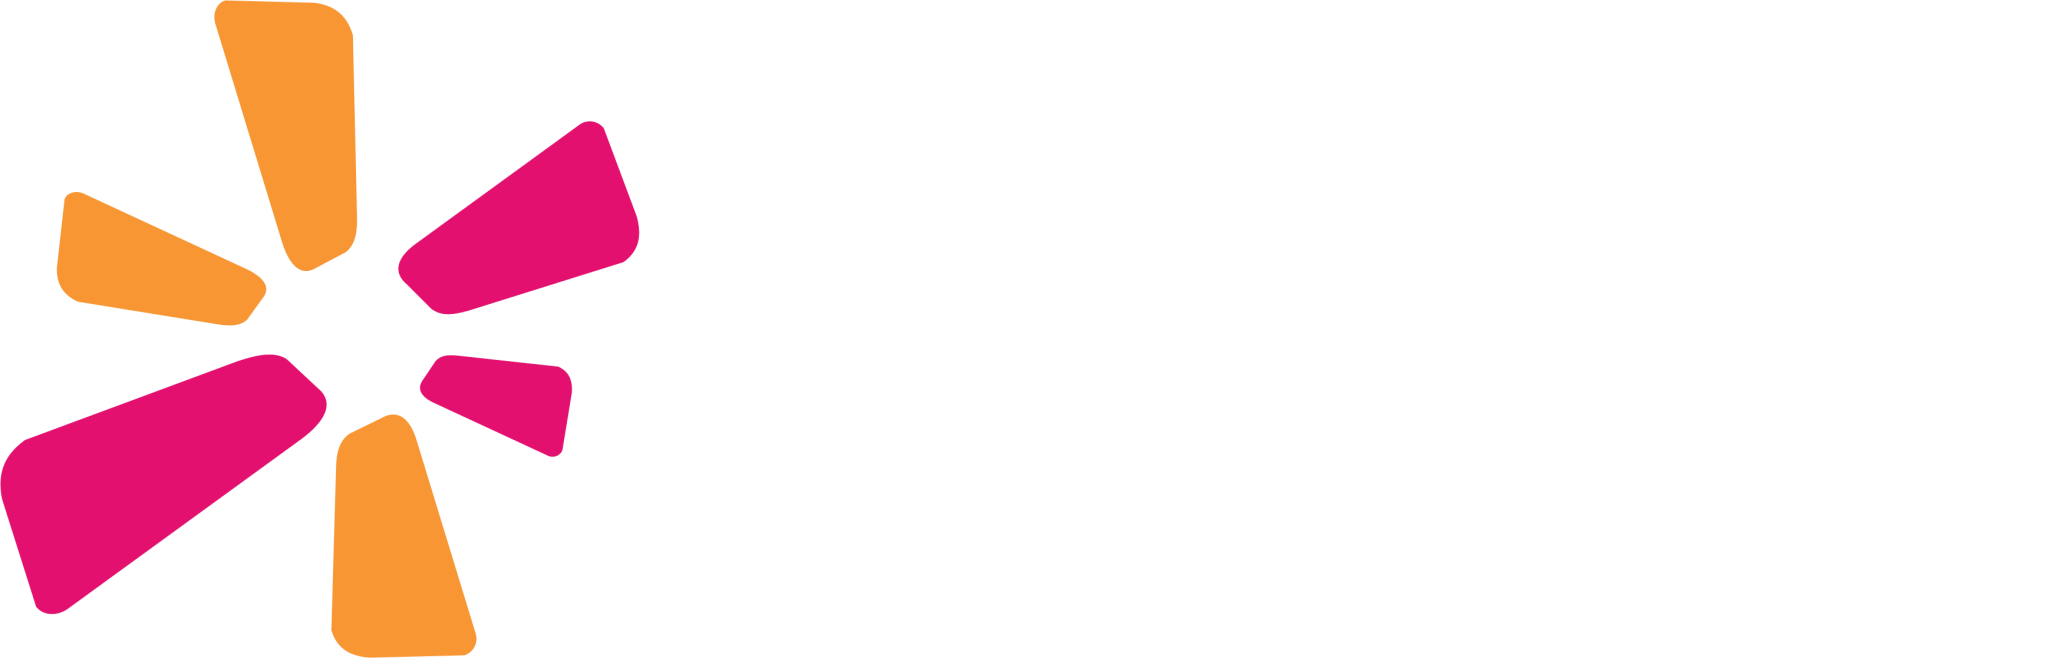 2 Glitra logo hvit png